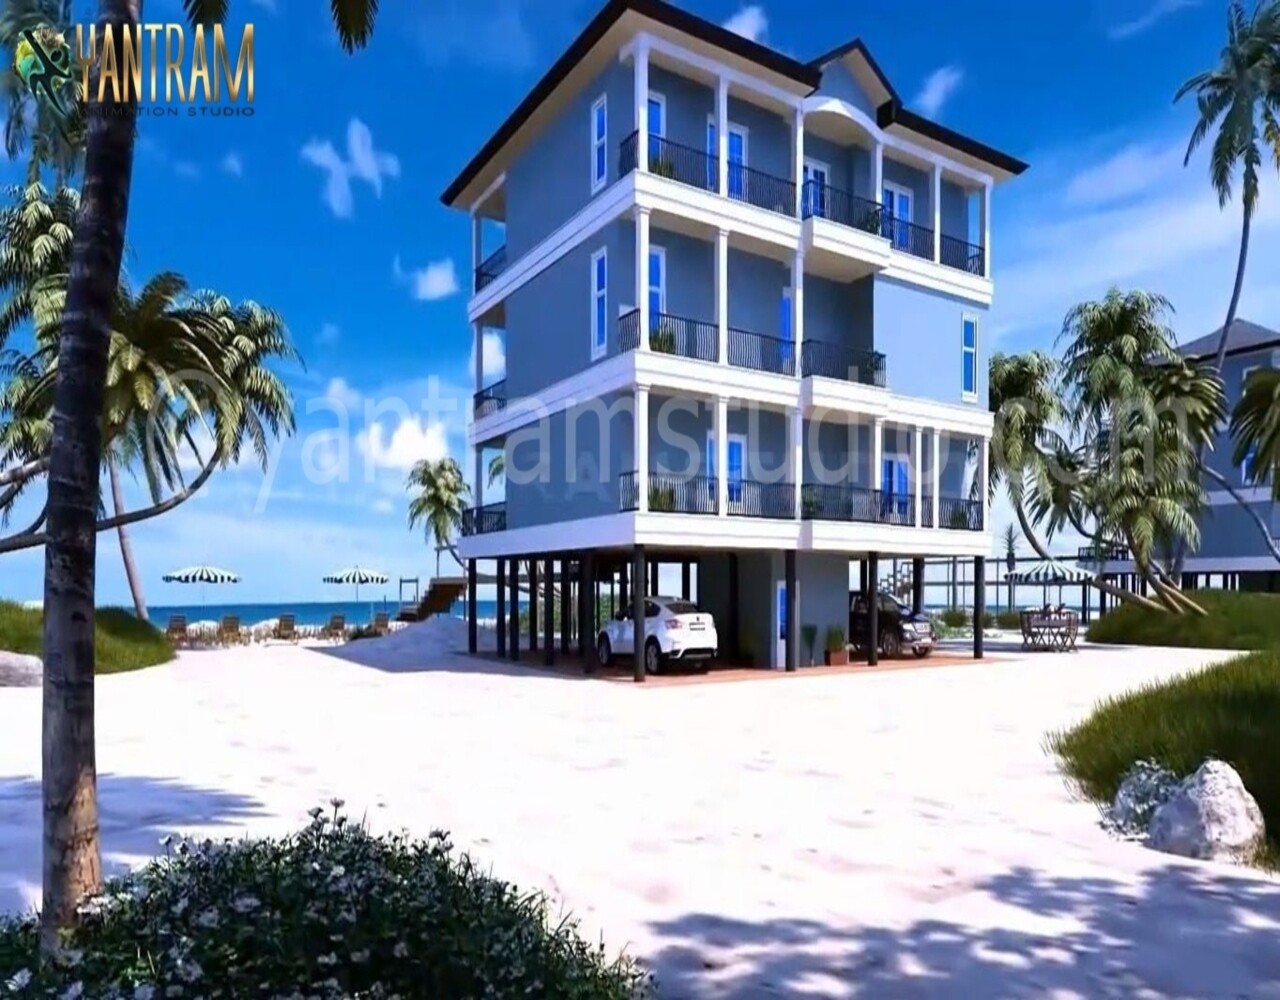 ArtStation - 3D Architectural Walkthrough Services of a breath-taking beach  house in Orlando, Florida